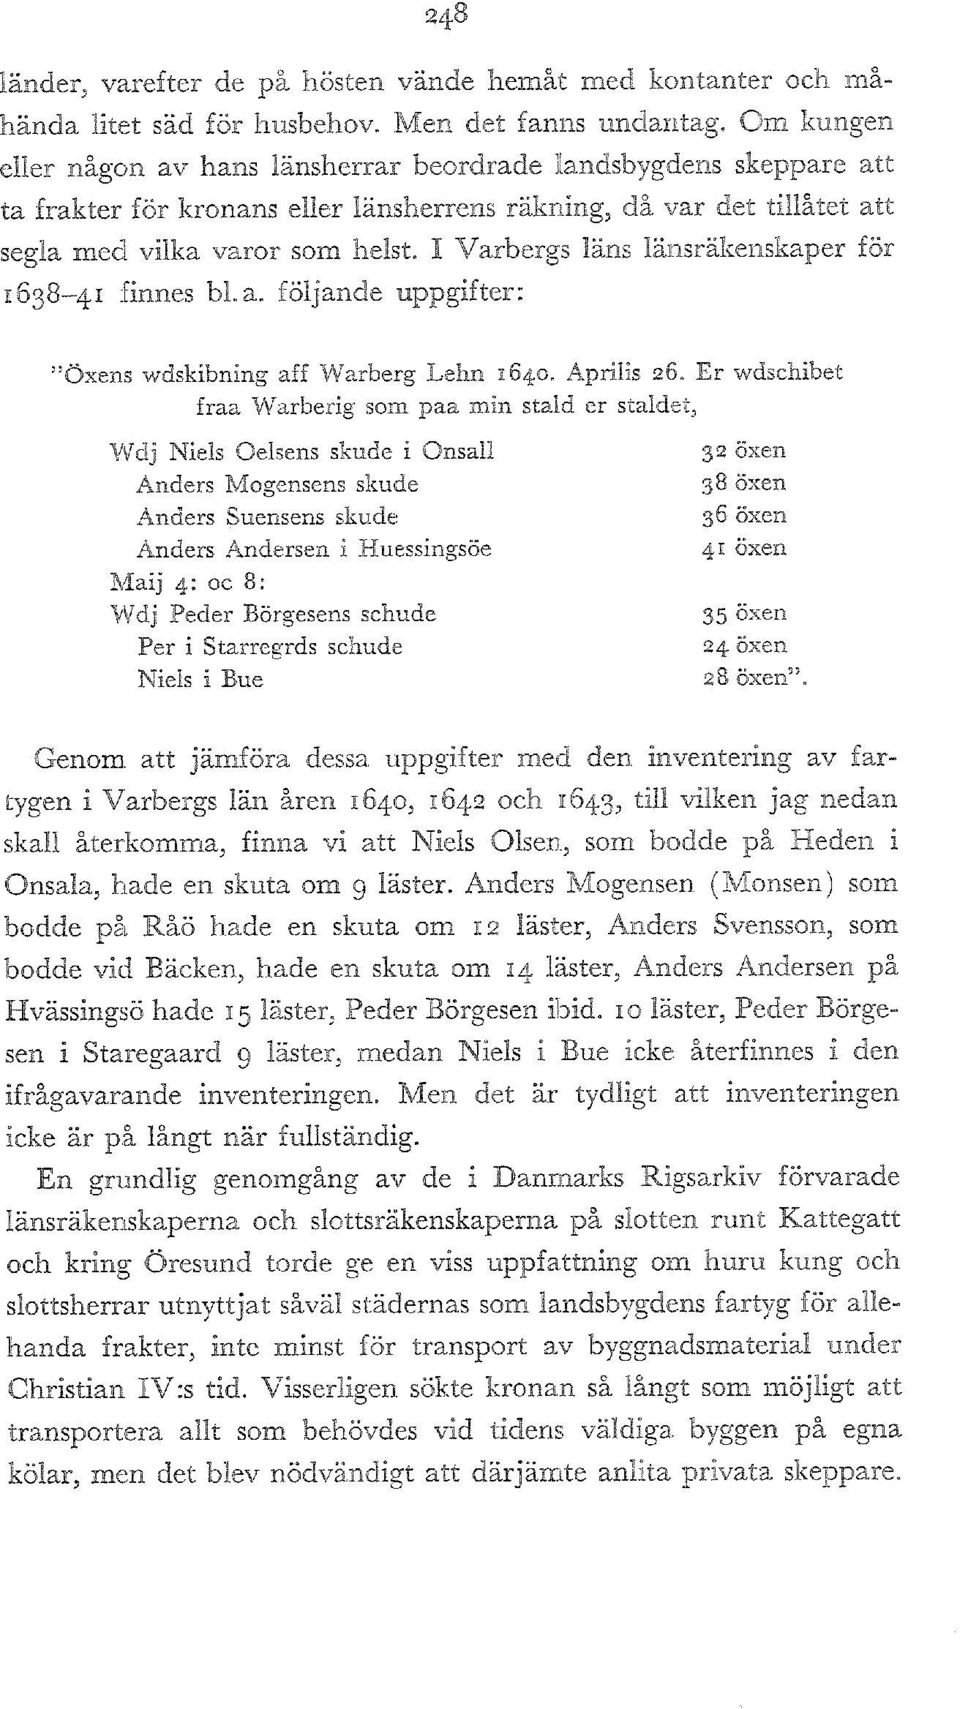 I Varbergs låns lånsråkenskaper for 84 finnes bl.a. foljande uppgifter: "Oxens wdskibning aff Warberg Lehn 40. Aprilis.